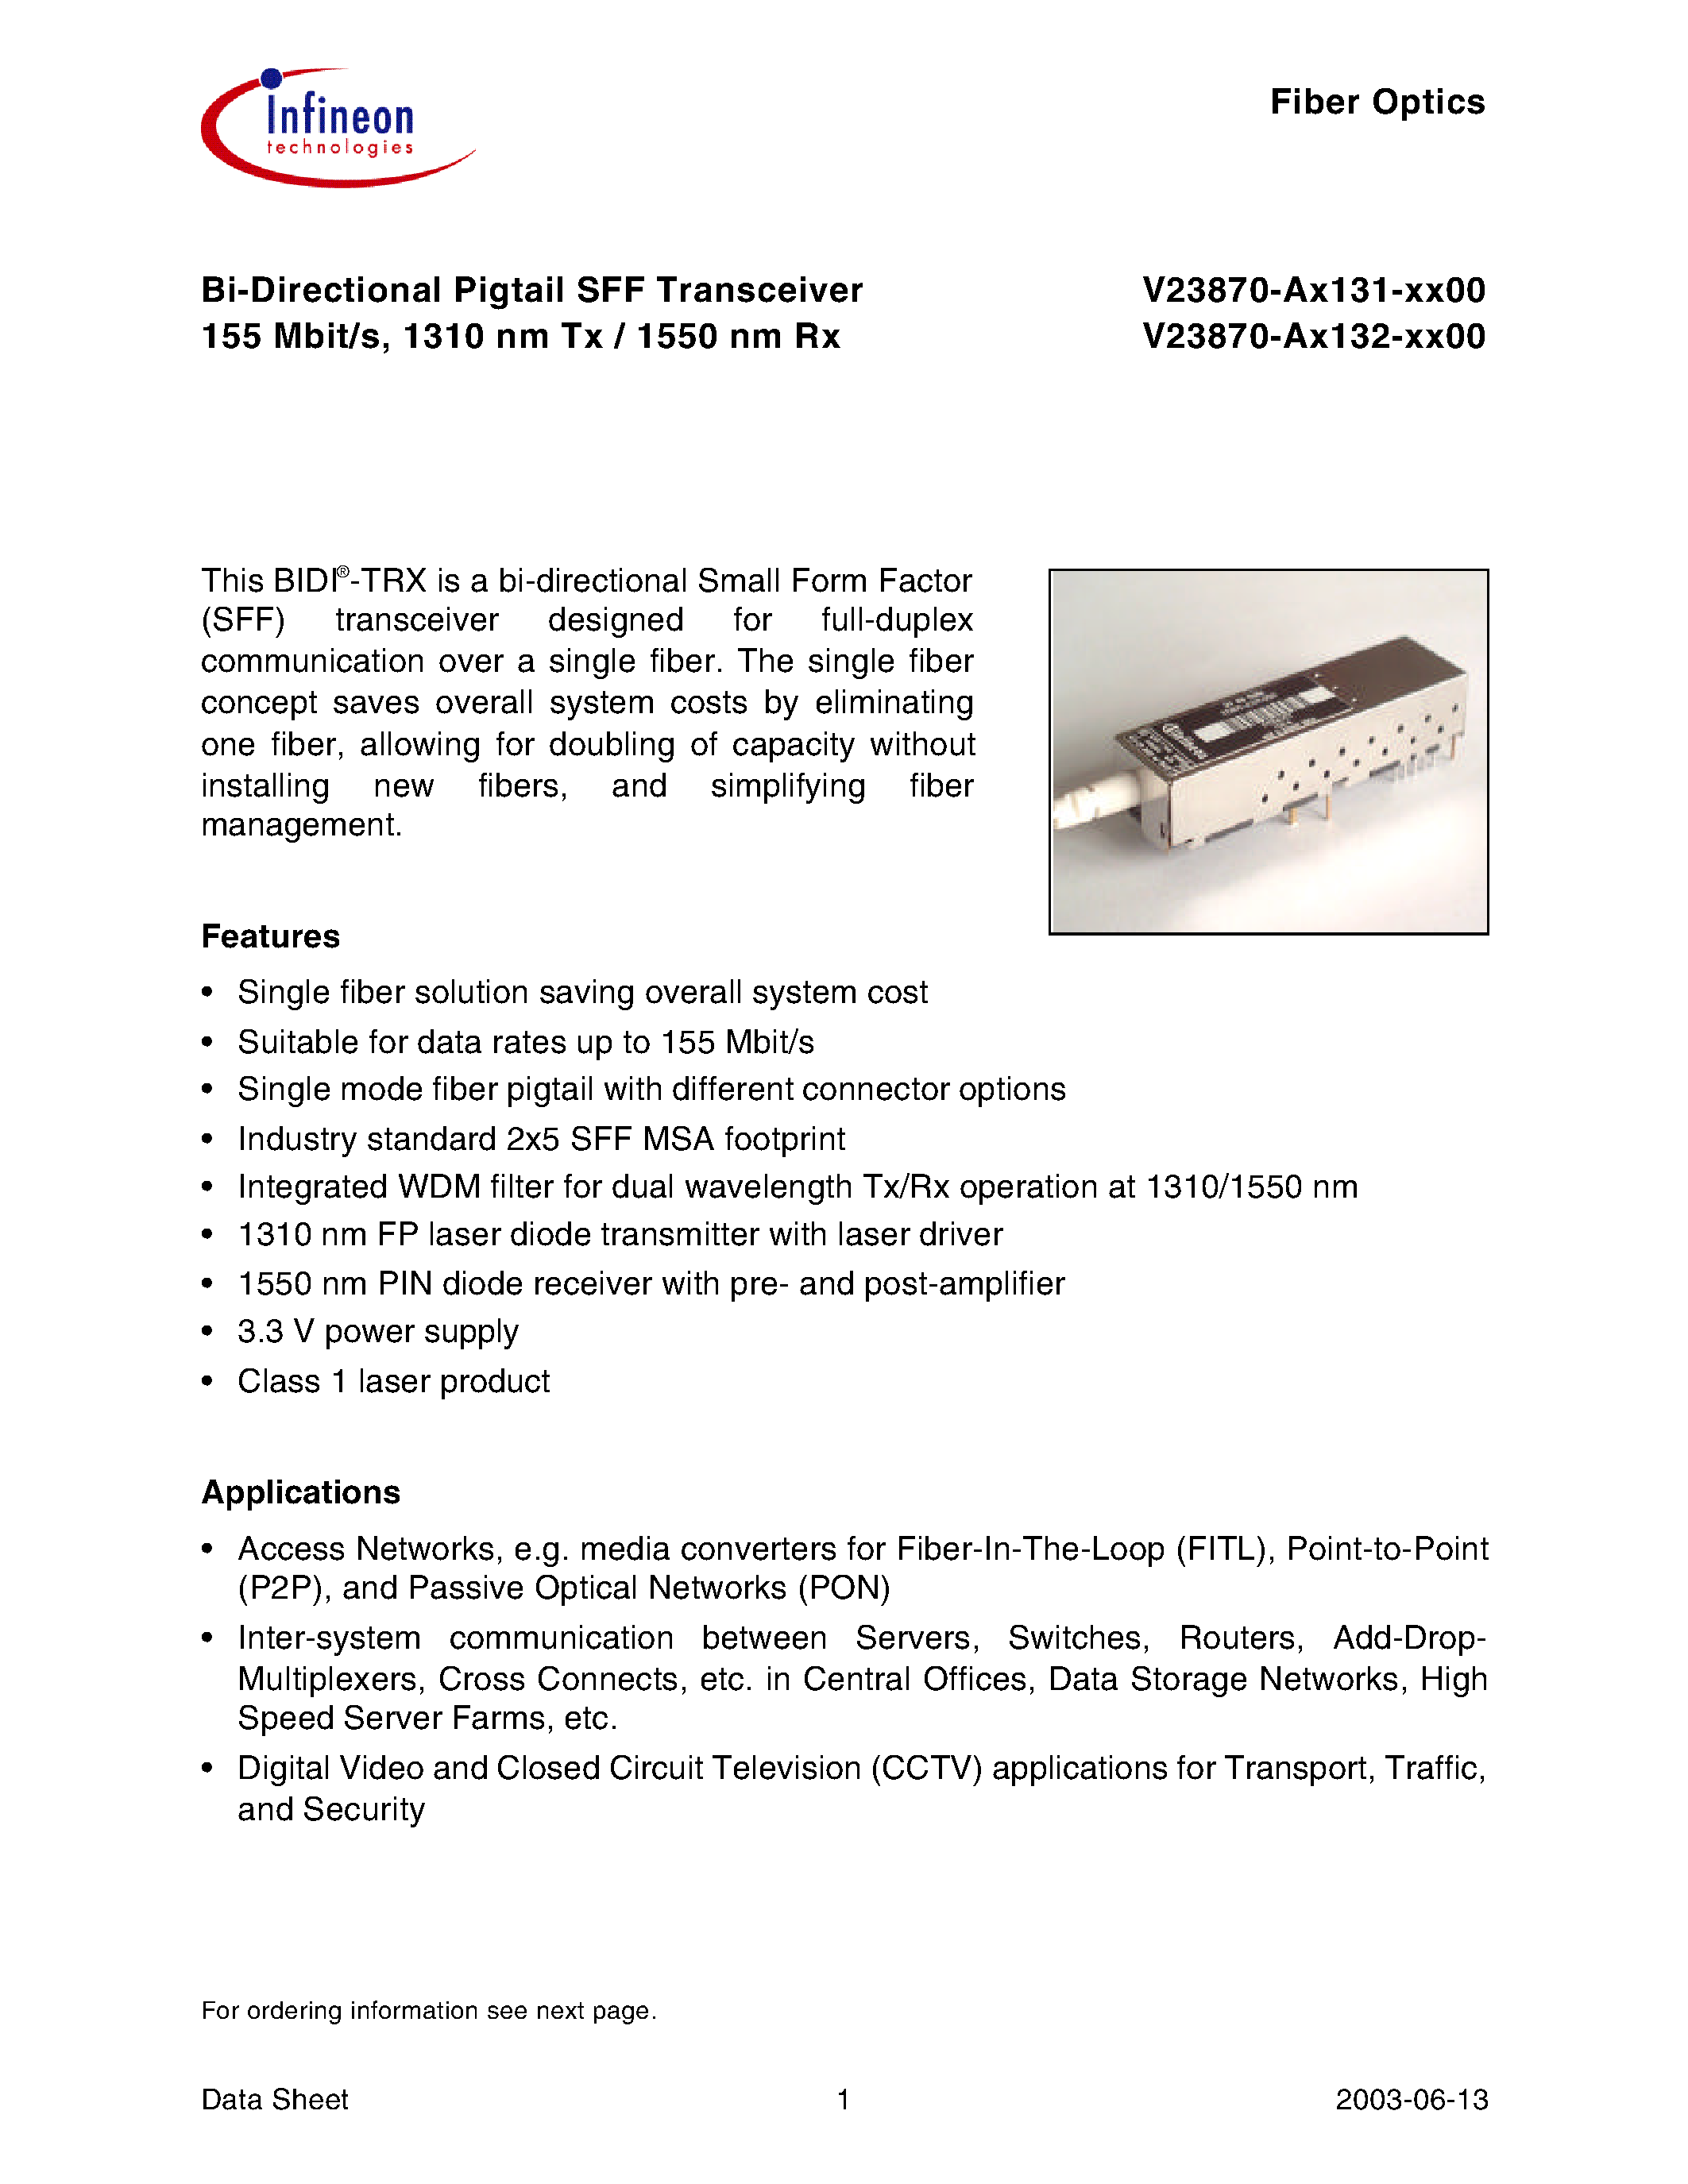 Даташит V23870-A3131-K200 - Bi-Directional Pigtail SFF Transceiver 155 Mbit/s/ 1310 nm Tx / 1550 nm Rx страница 1